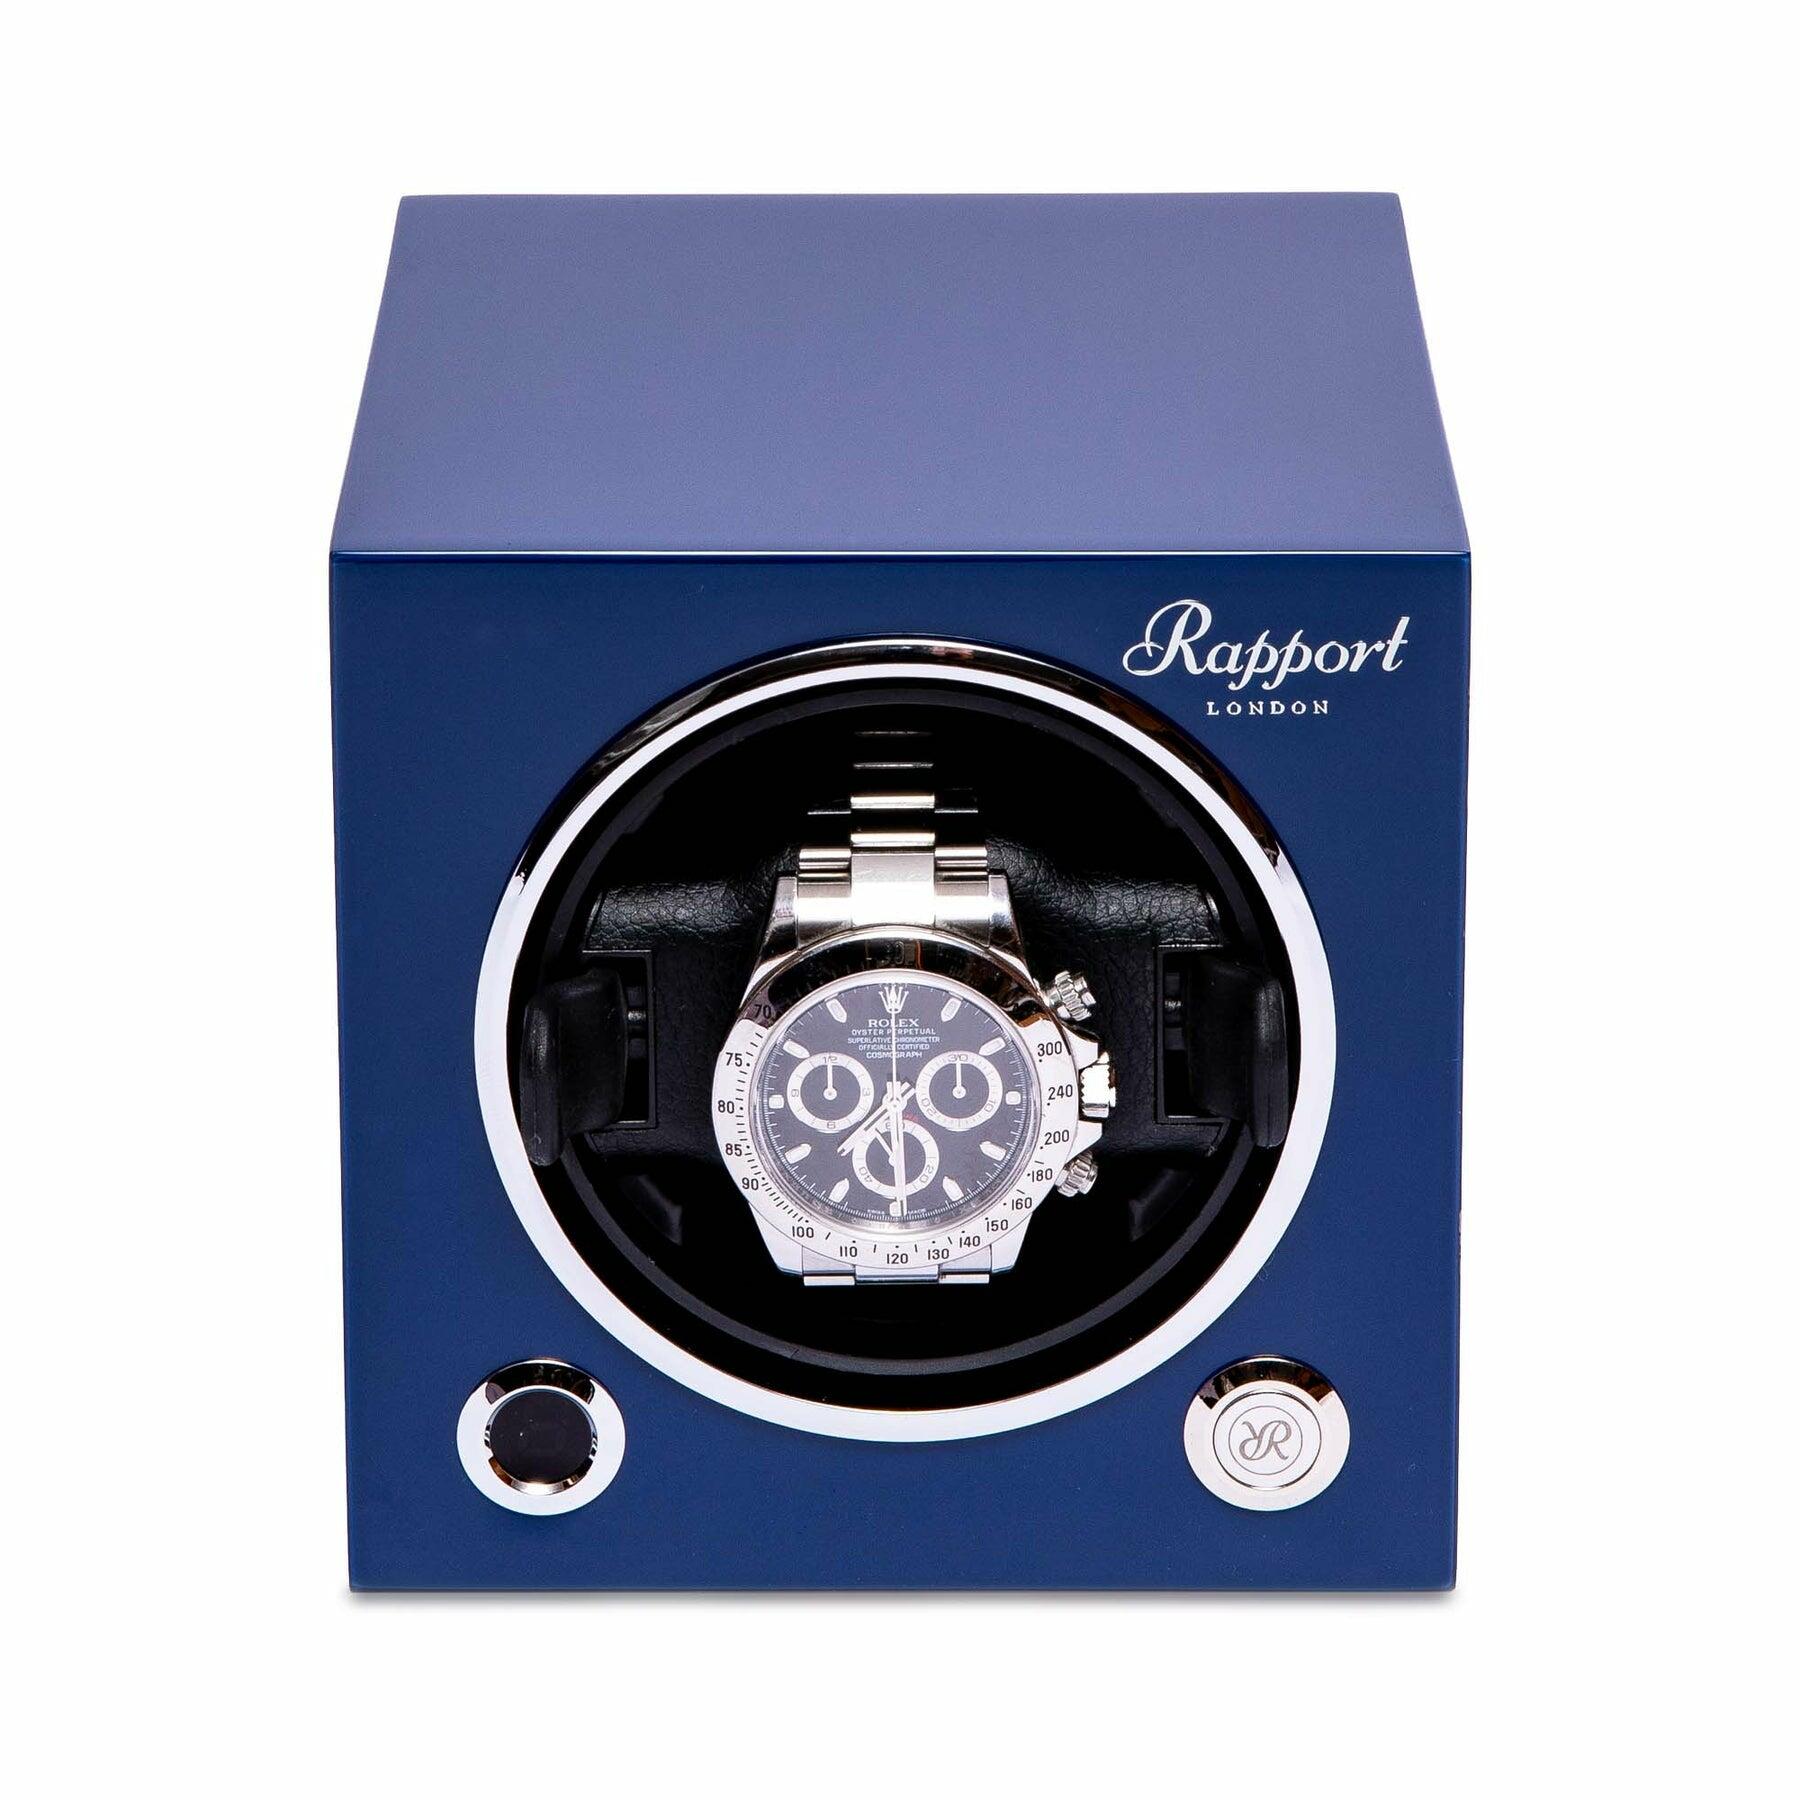 Rapport Evolution Single Watch Winder MK3 in Blue - The Classic Watch Buyers Club Ltd